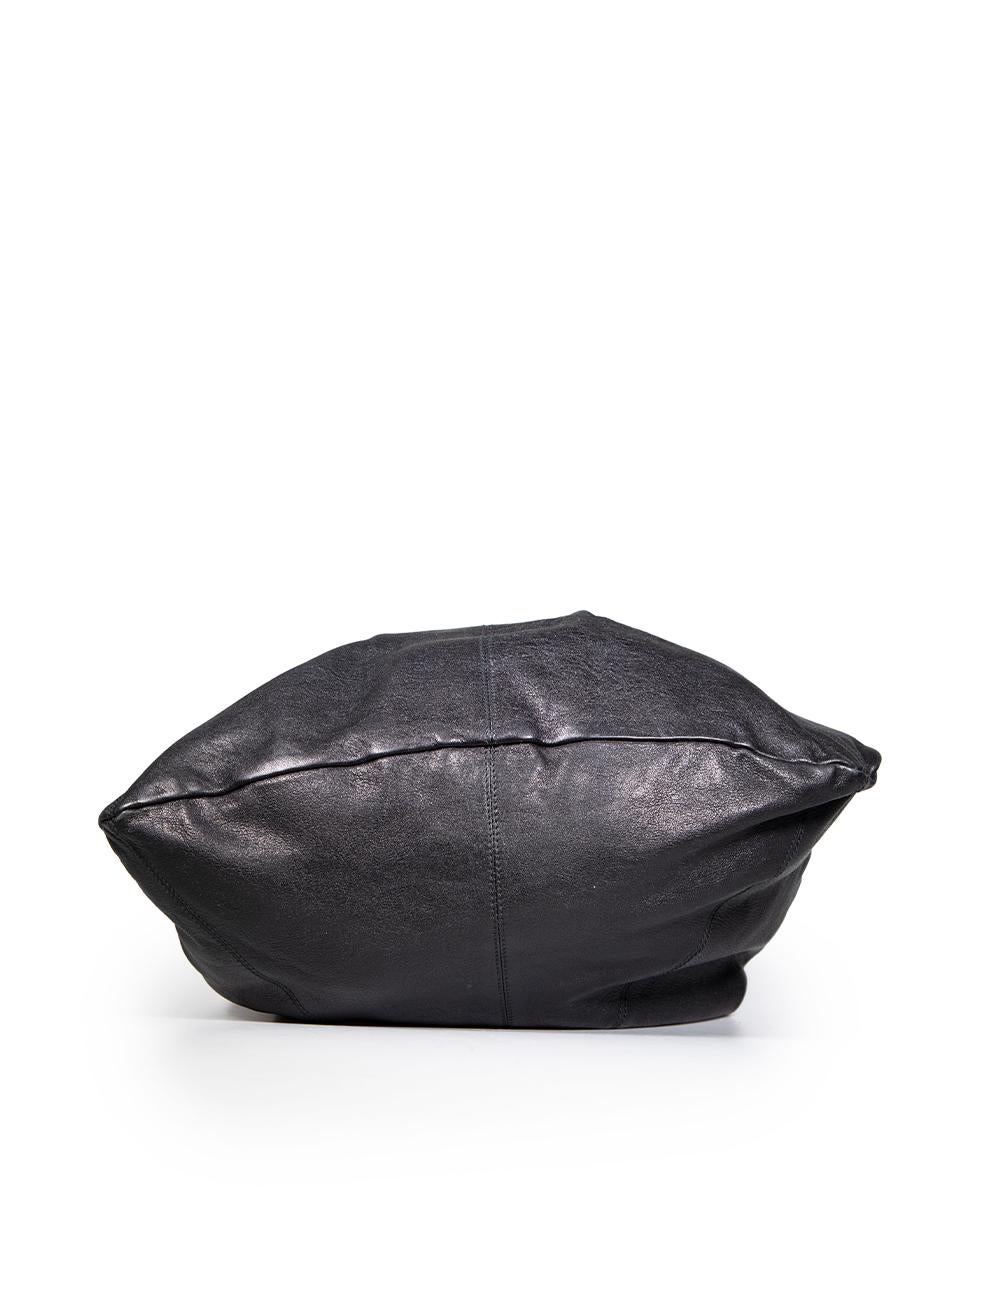 Women's Salvatore Ferragamo Black Leather Miss Vara Hobo Bag For Sale